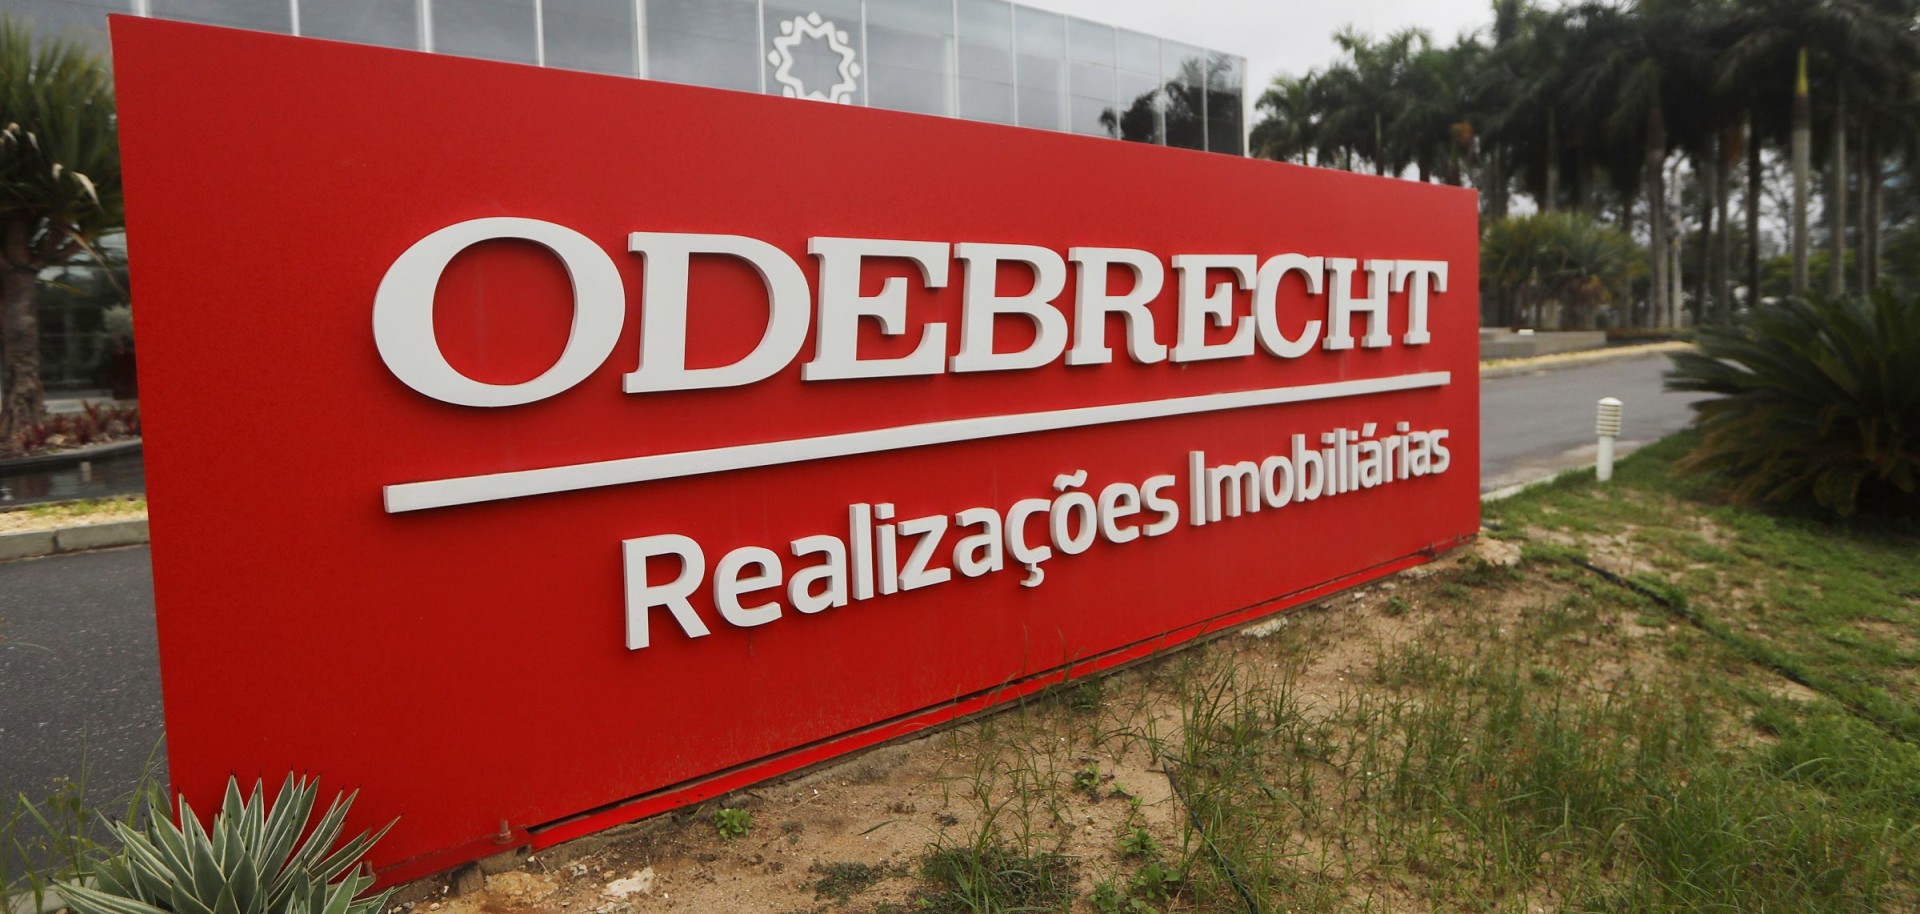 The Odebrecht Corruption Scandal in Brazil